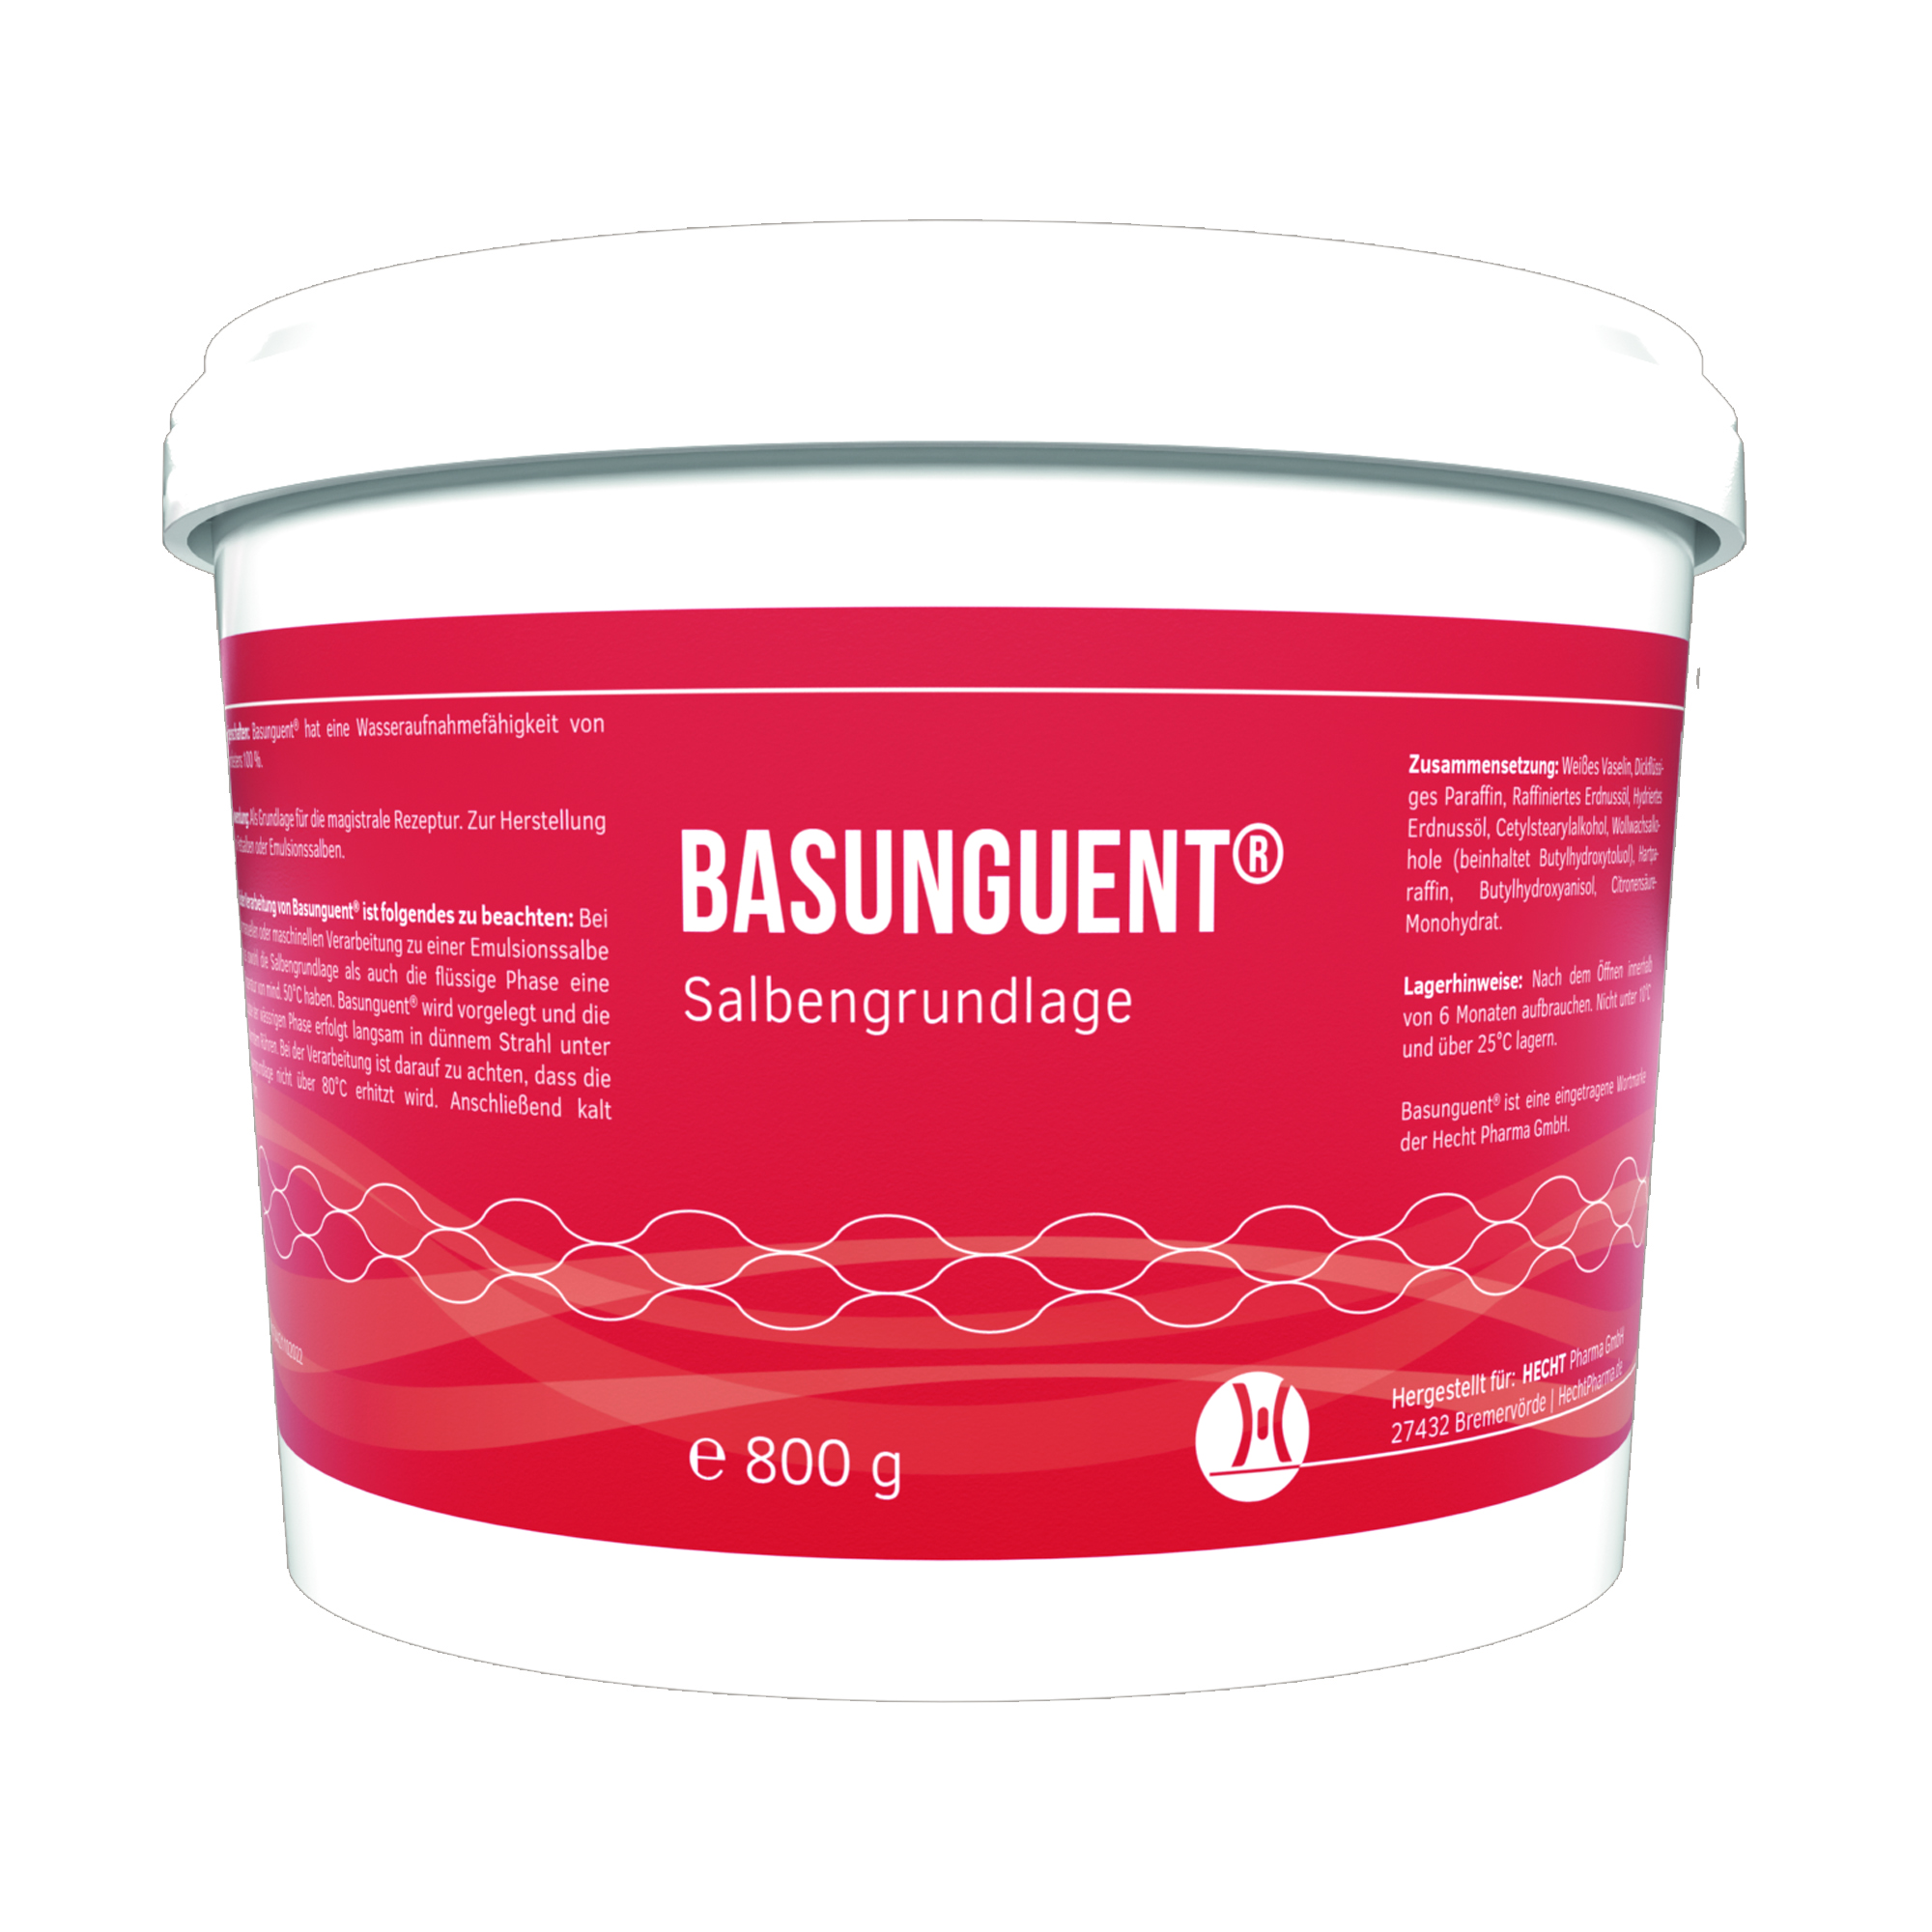 Basunguent® Salbengrundlage